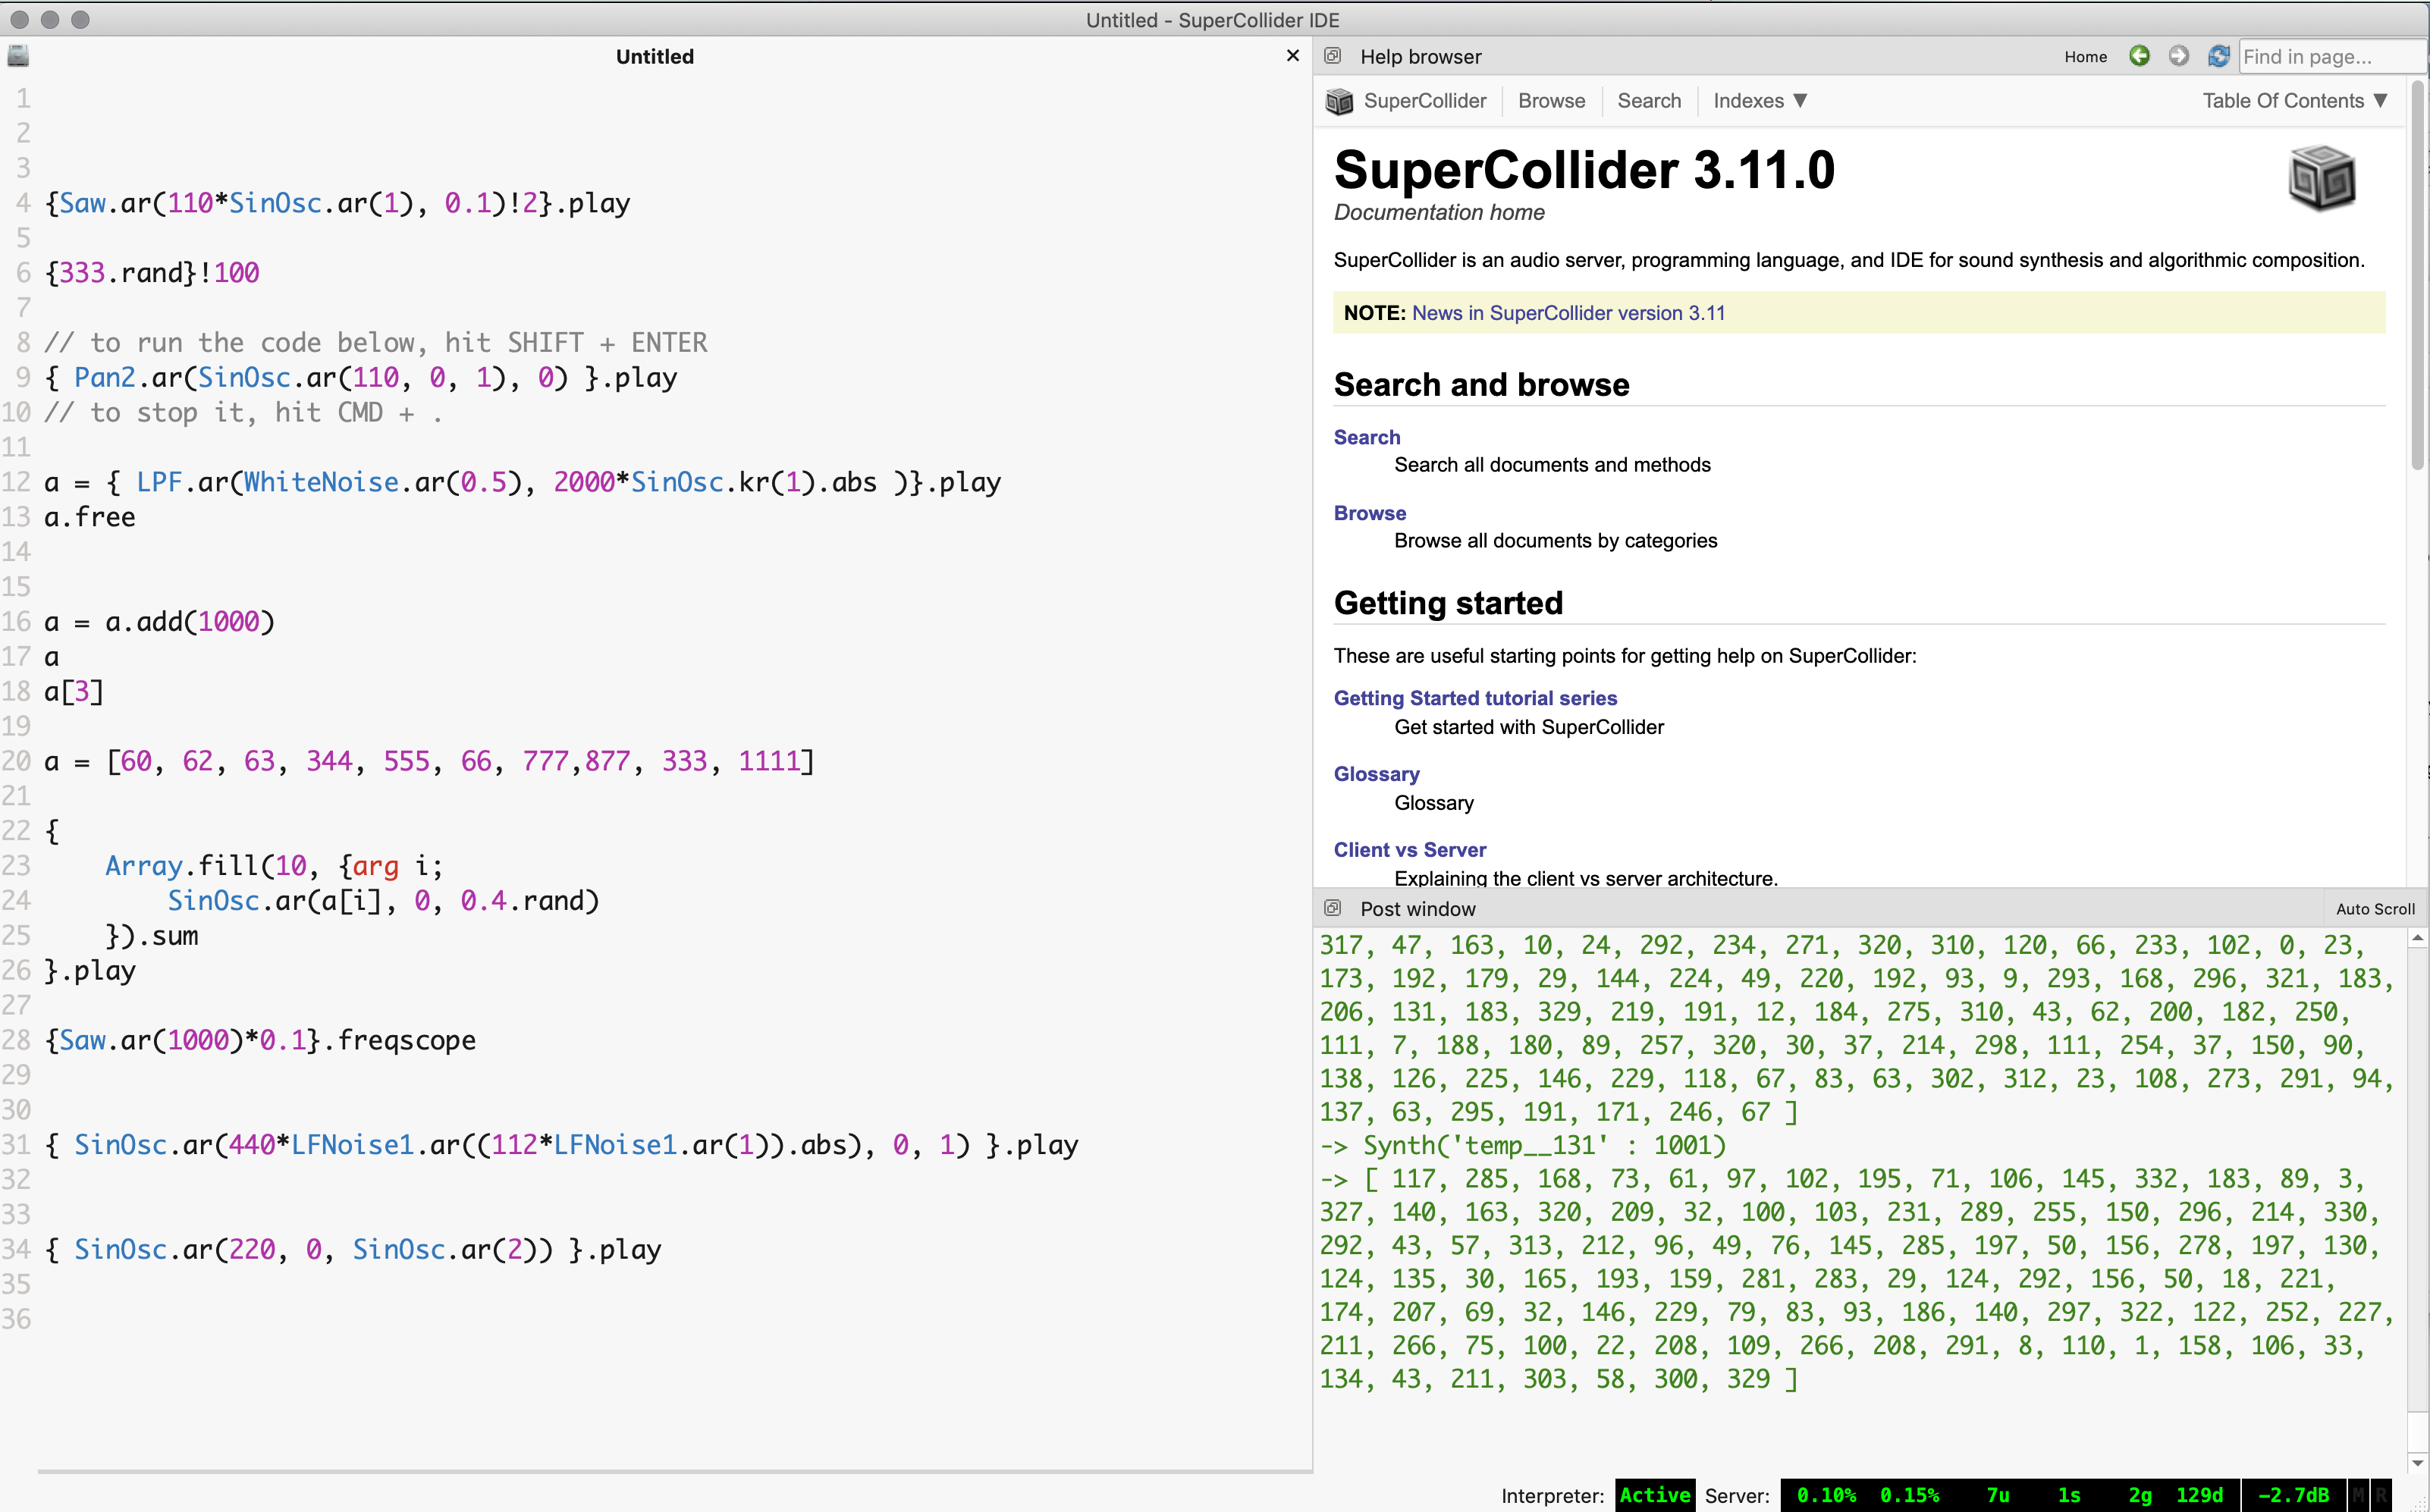 A screenshot of the SuperCollider IDE